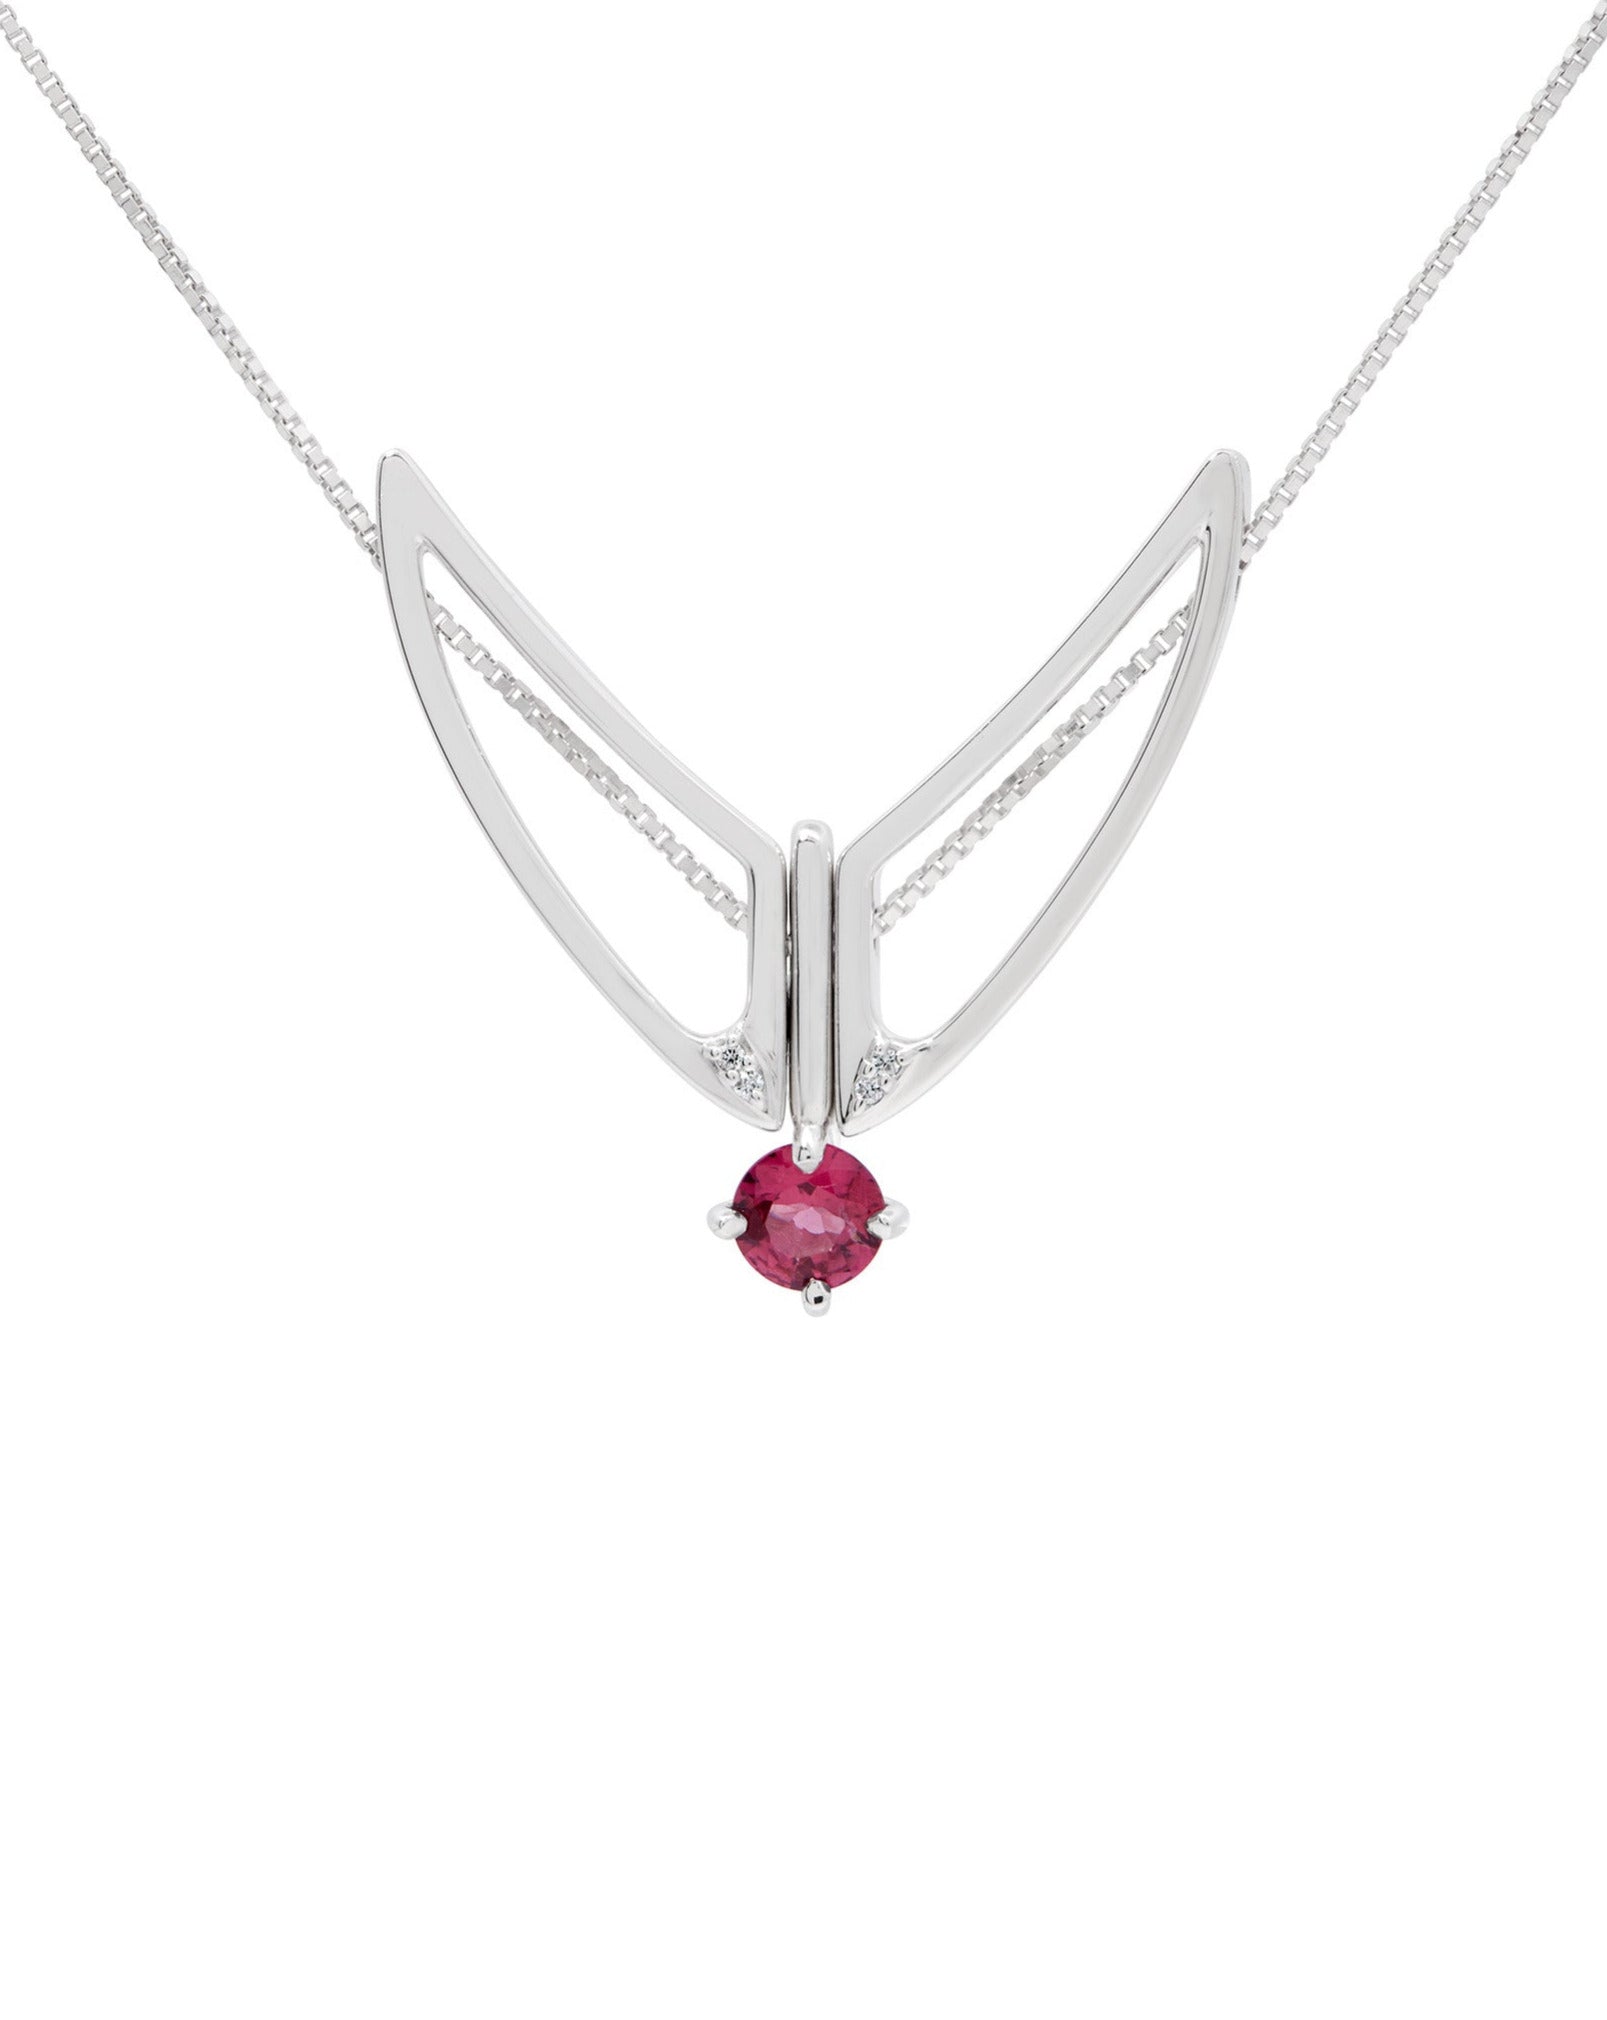 Buy Hype Women x Bliss Lau Attune Necklace Pink Garnet, Handcrafted Jewelry